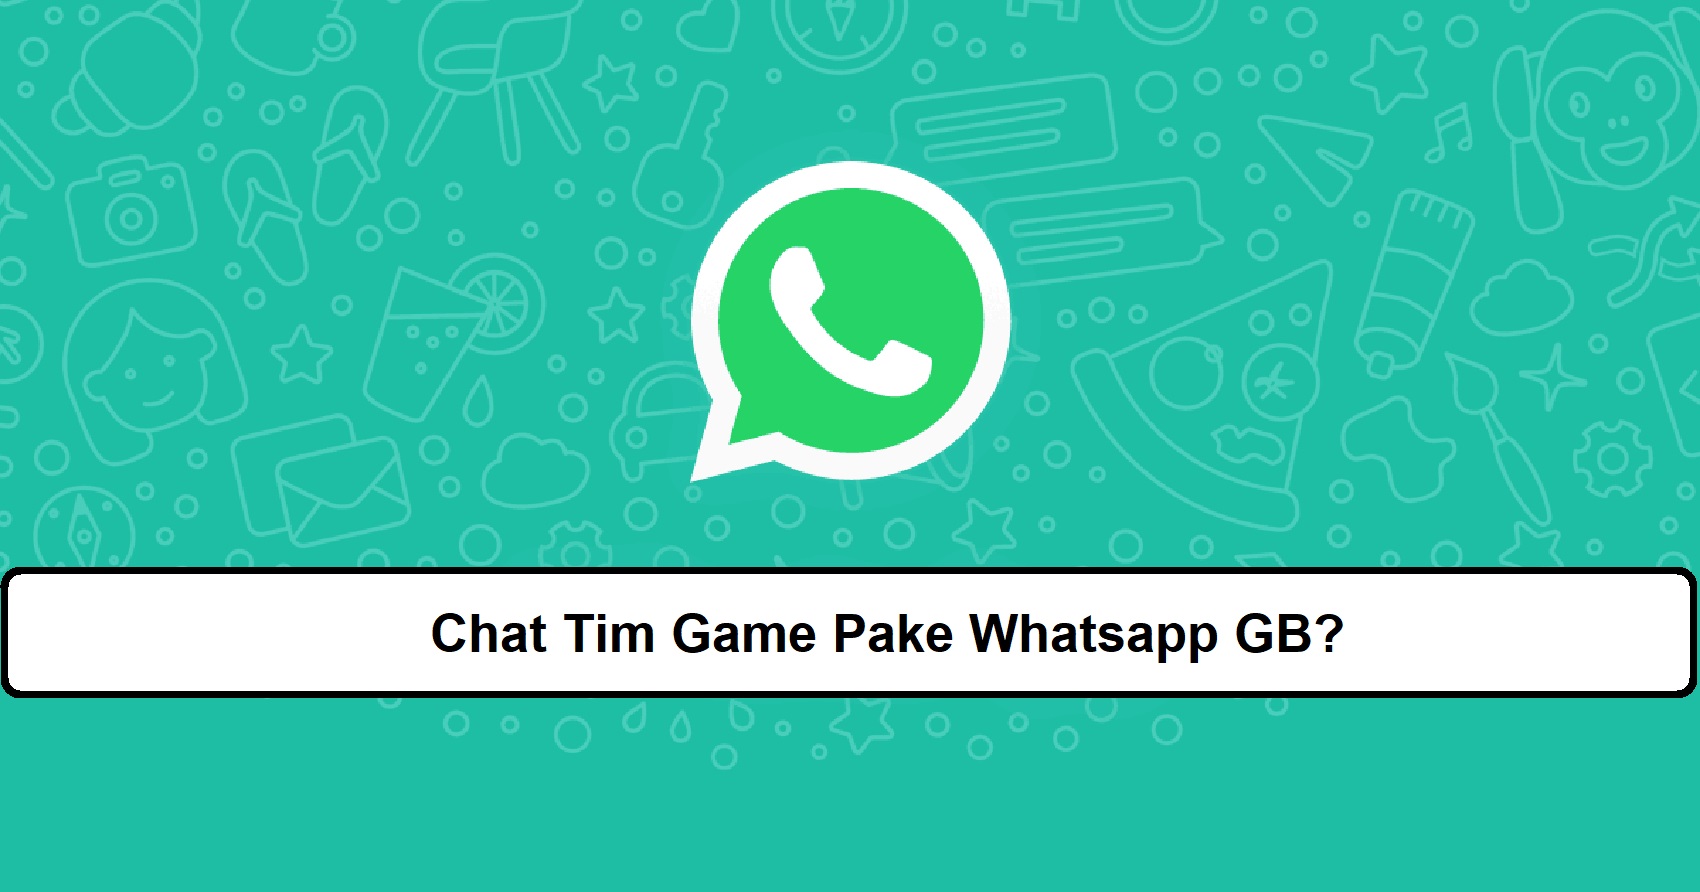 Chat Tim Game Pake Whatsapp GB?